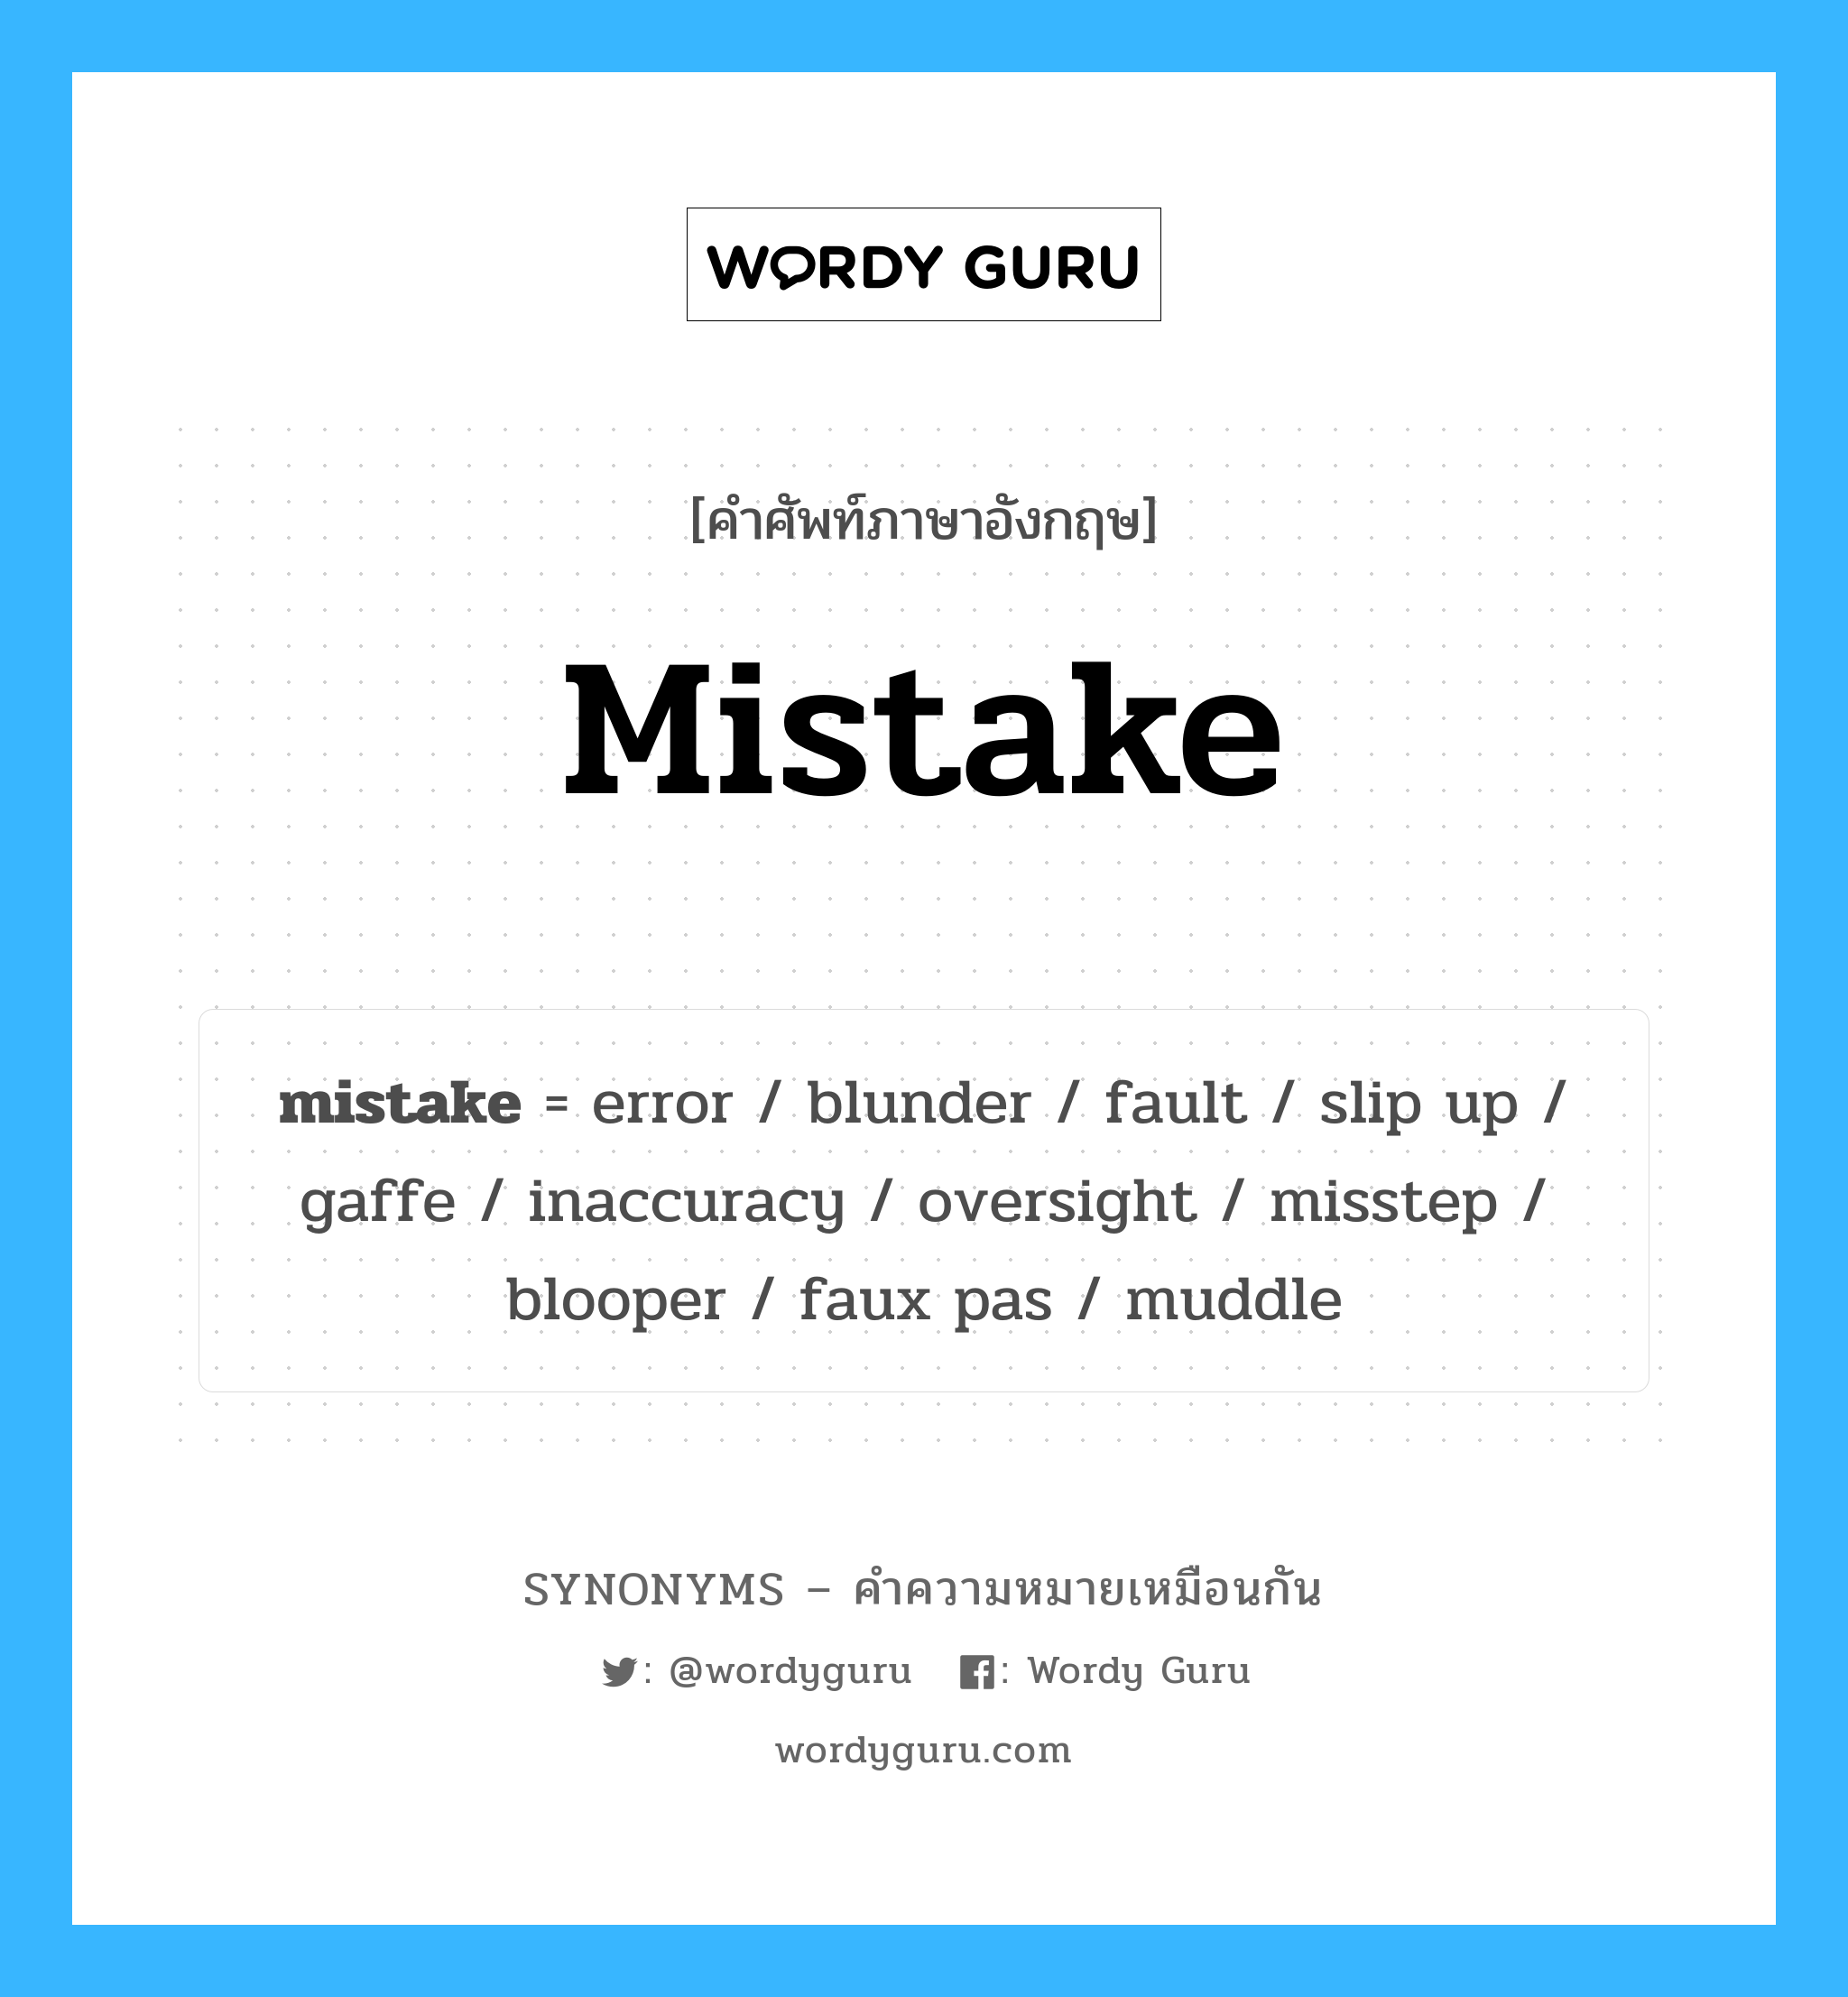 faux pas เป็นหนึ่งใน mistake และมีคำอื่น ๆ อีกดังนี้, คำศัพท์ภาษาอังกฤษ faux pas ความหมายคล้ายกันกับ mistake แปลว่า faux pas หมวด mistake